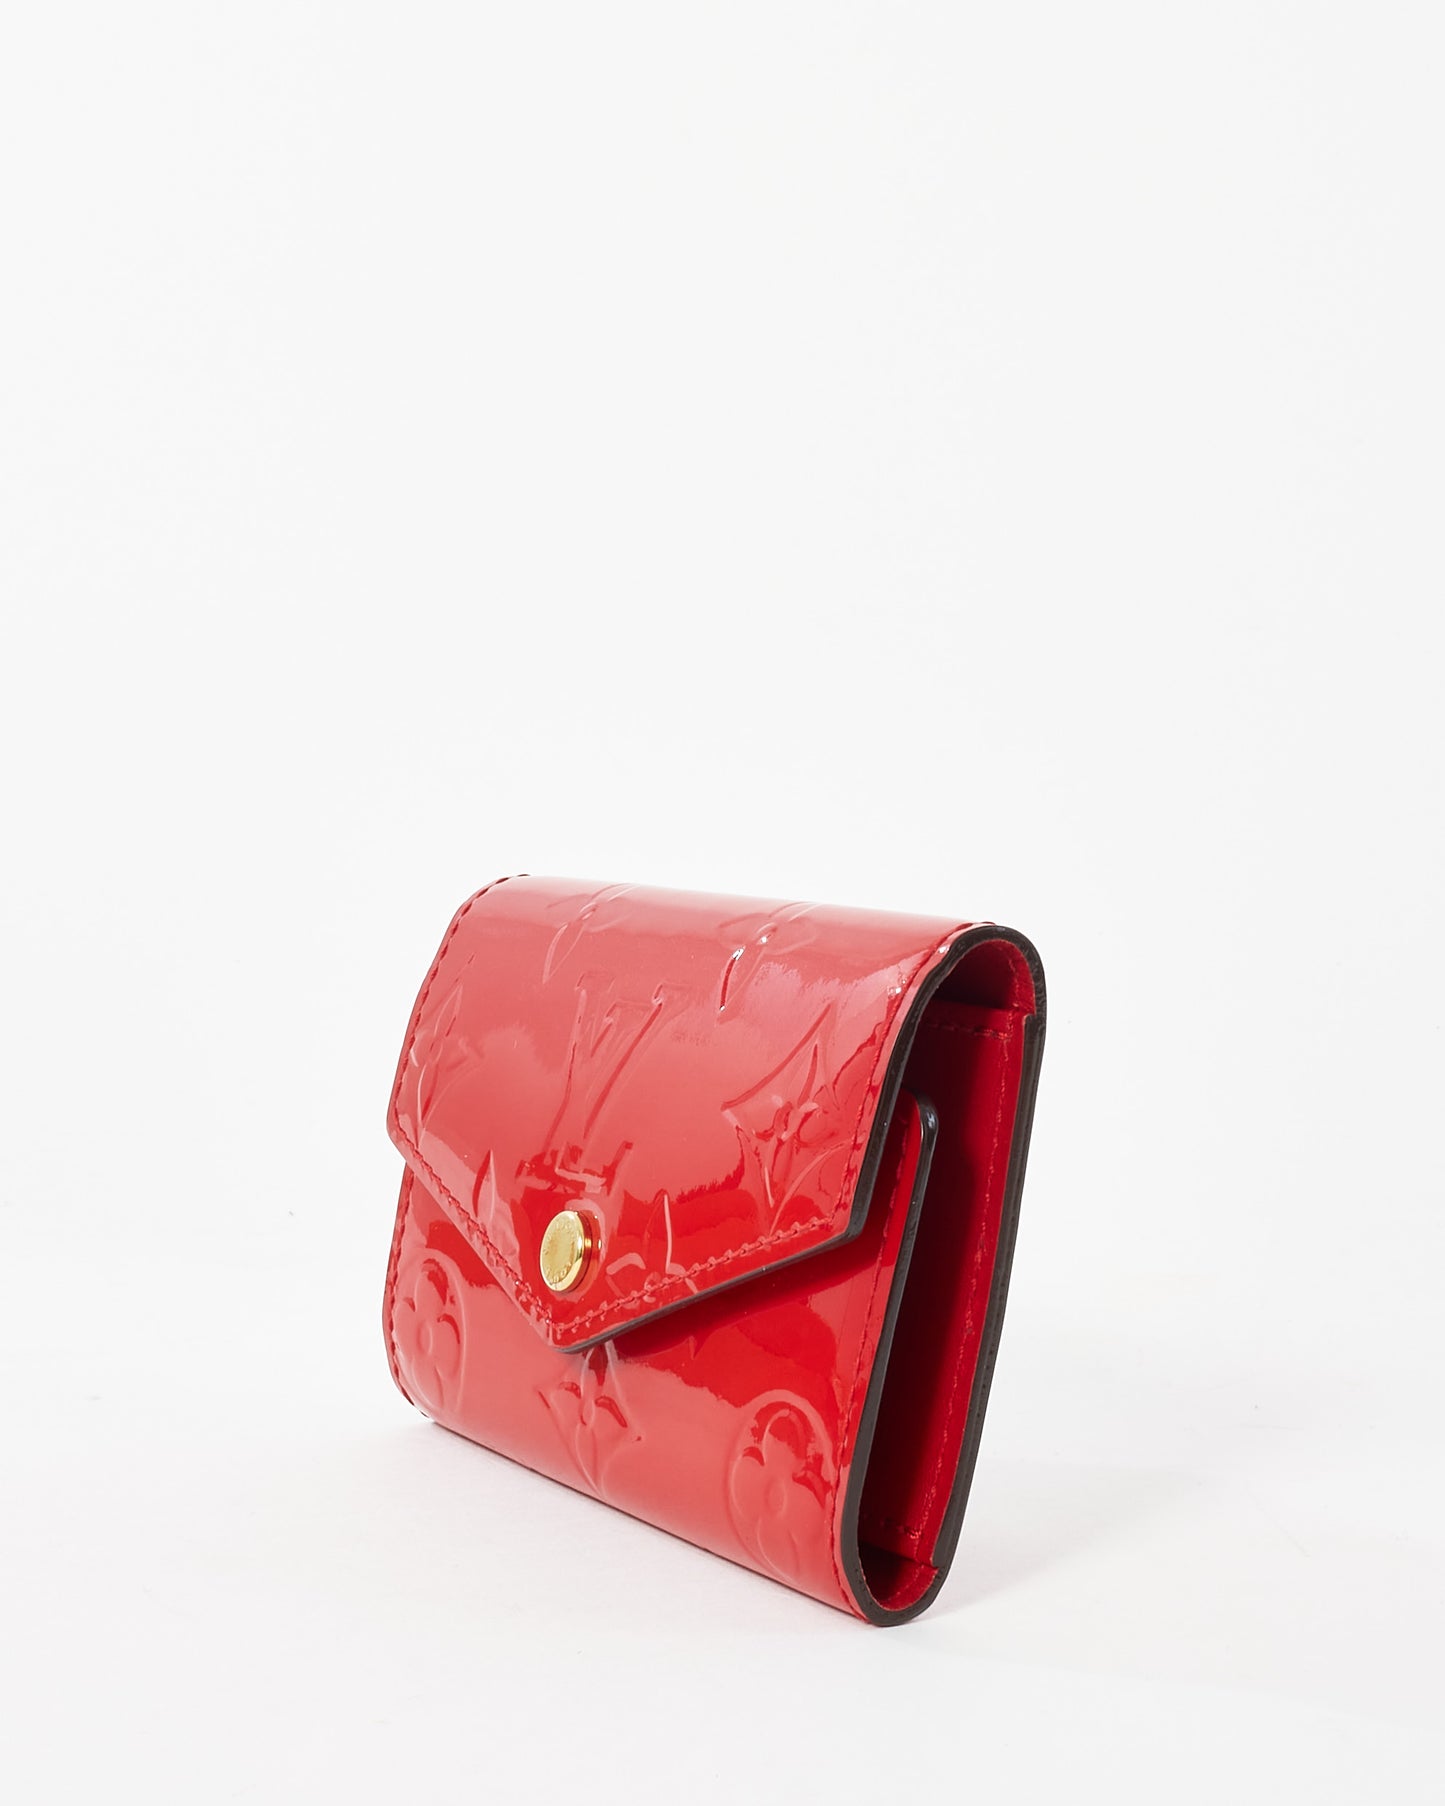 Louis Vuitton Red Monogram Vernis Leather 6 Key Holder